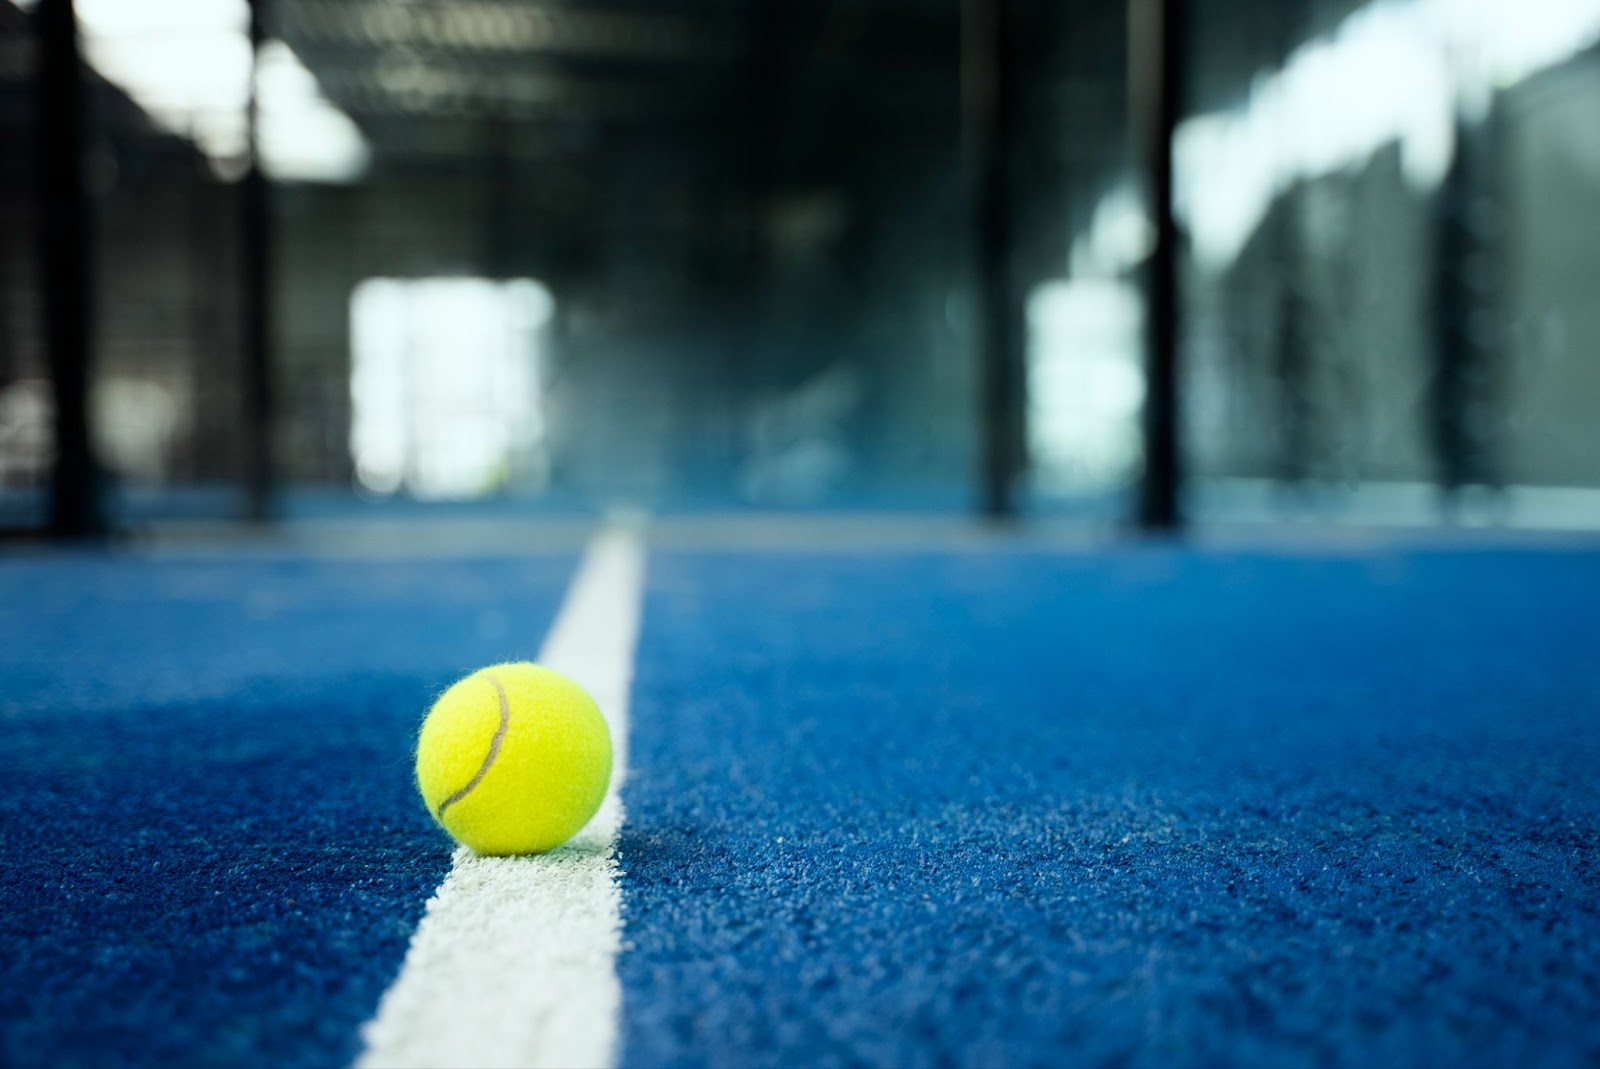 Tennis ball on white line